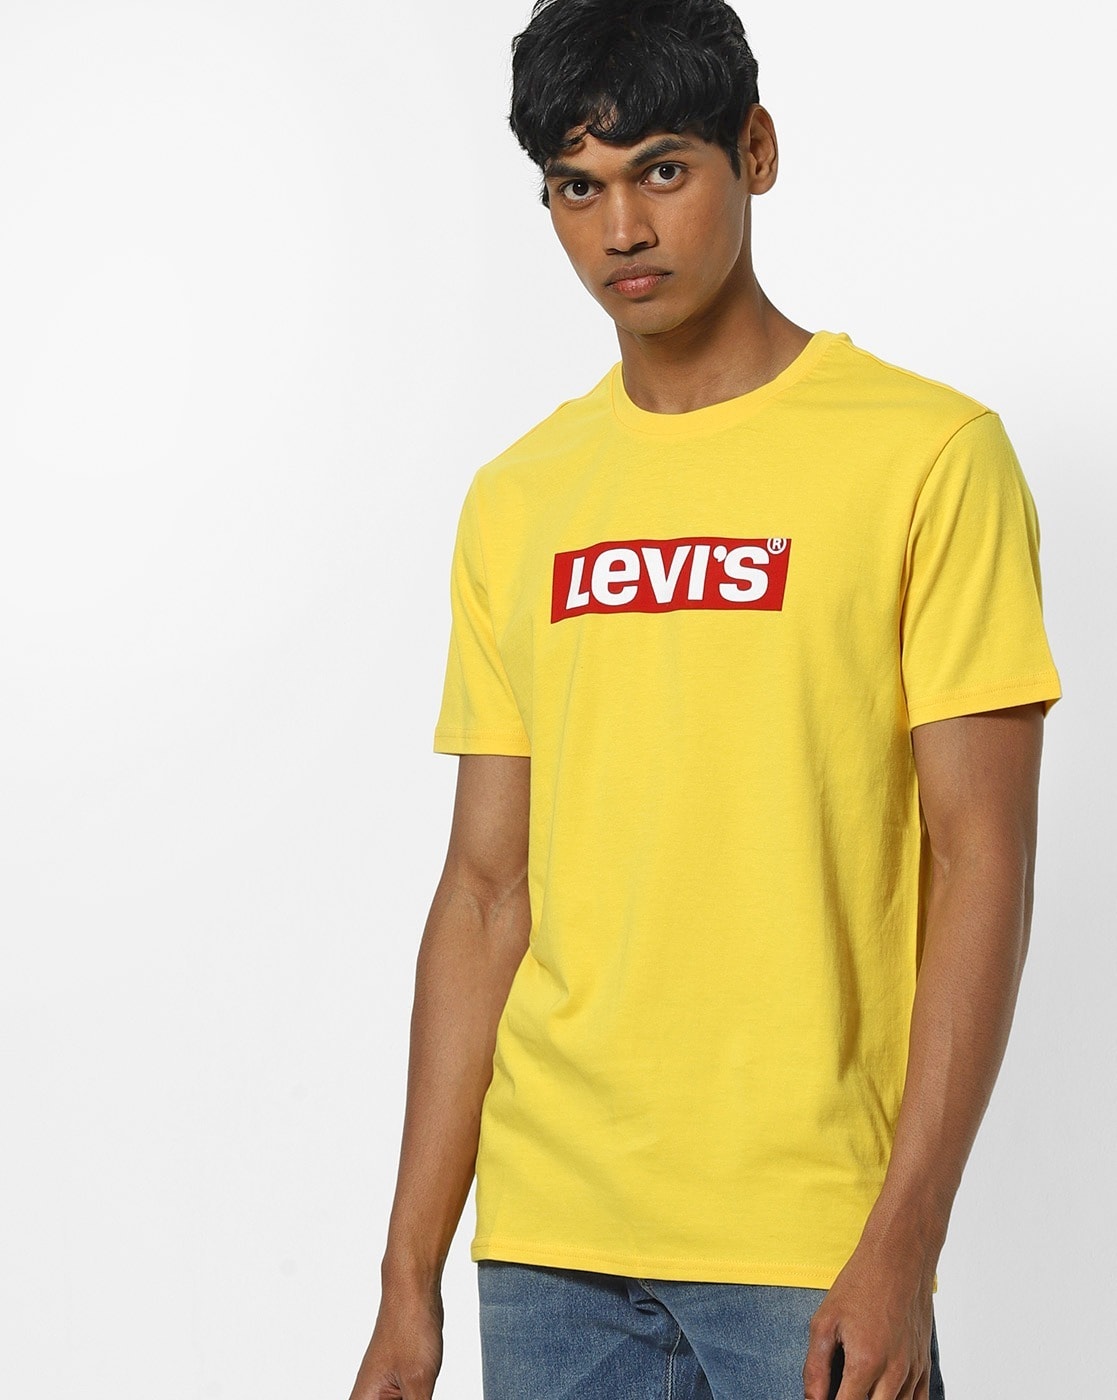 Røg Foran forbundet Buy Yellow Tshirts for Men by LEVIS Online | Ajio.com